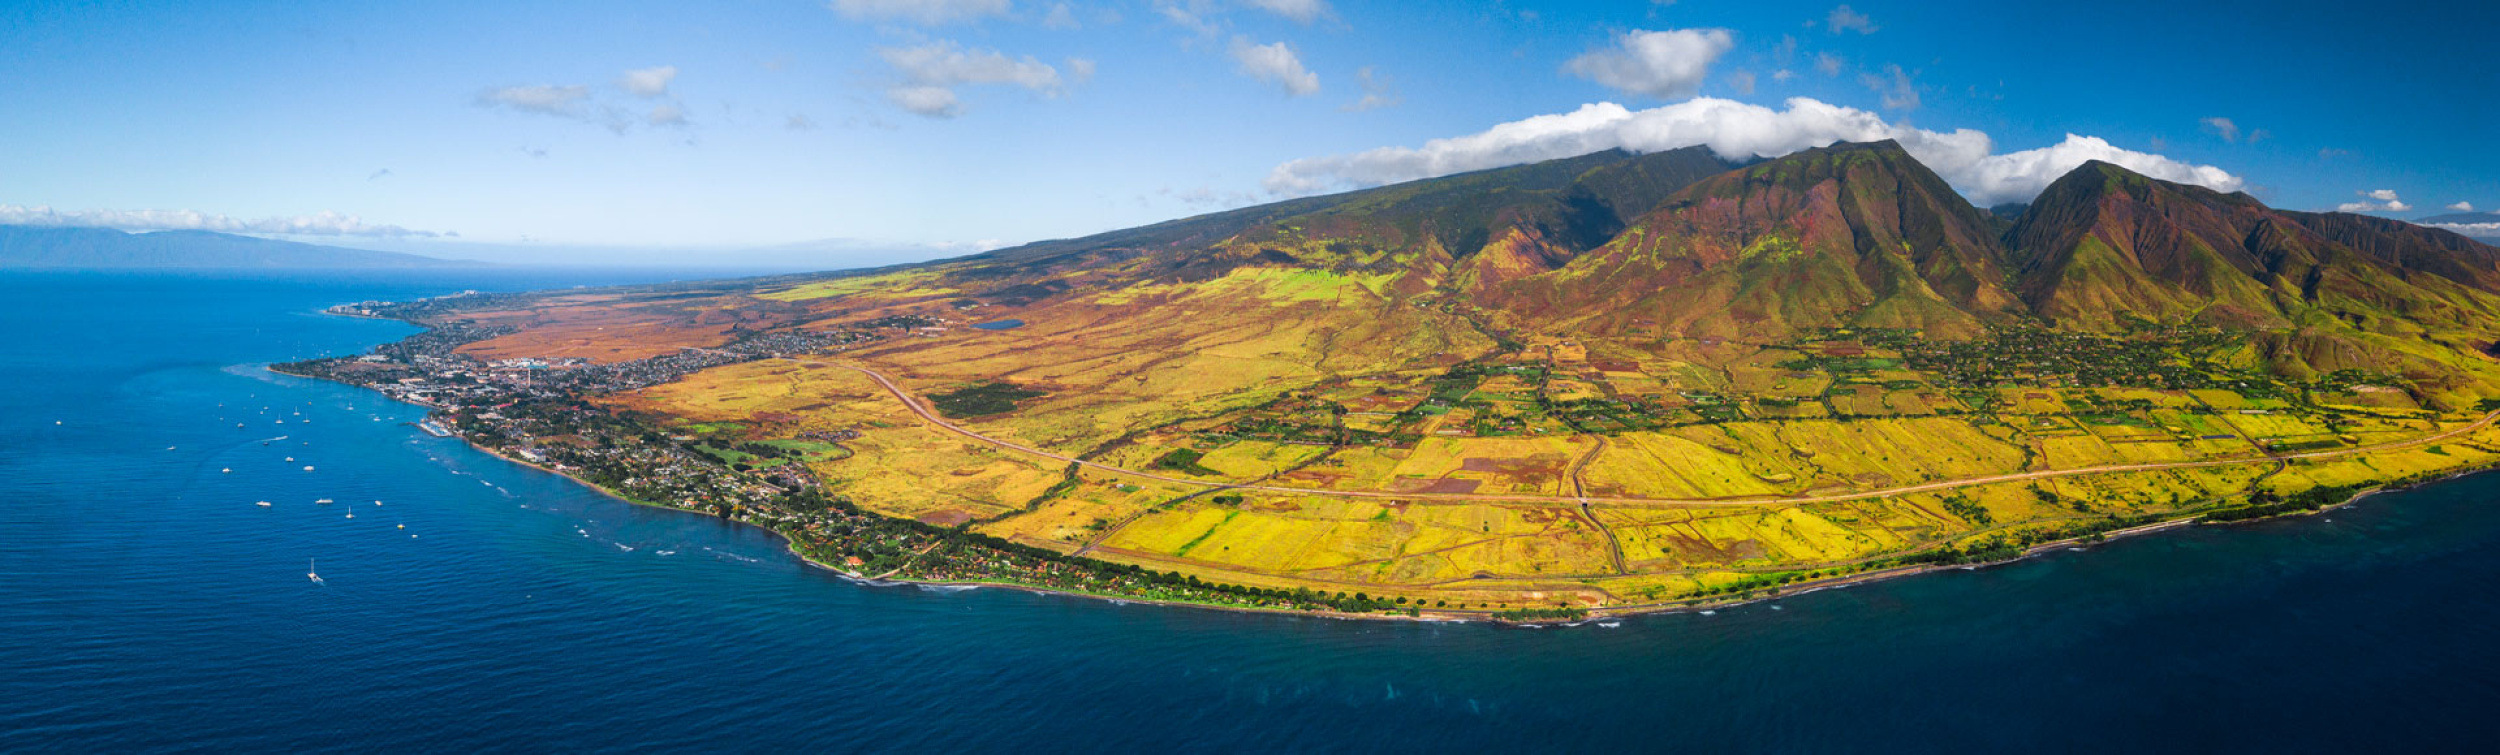 www.hawaii-guide.com